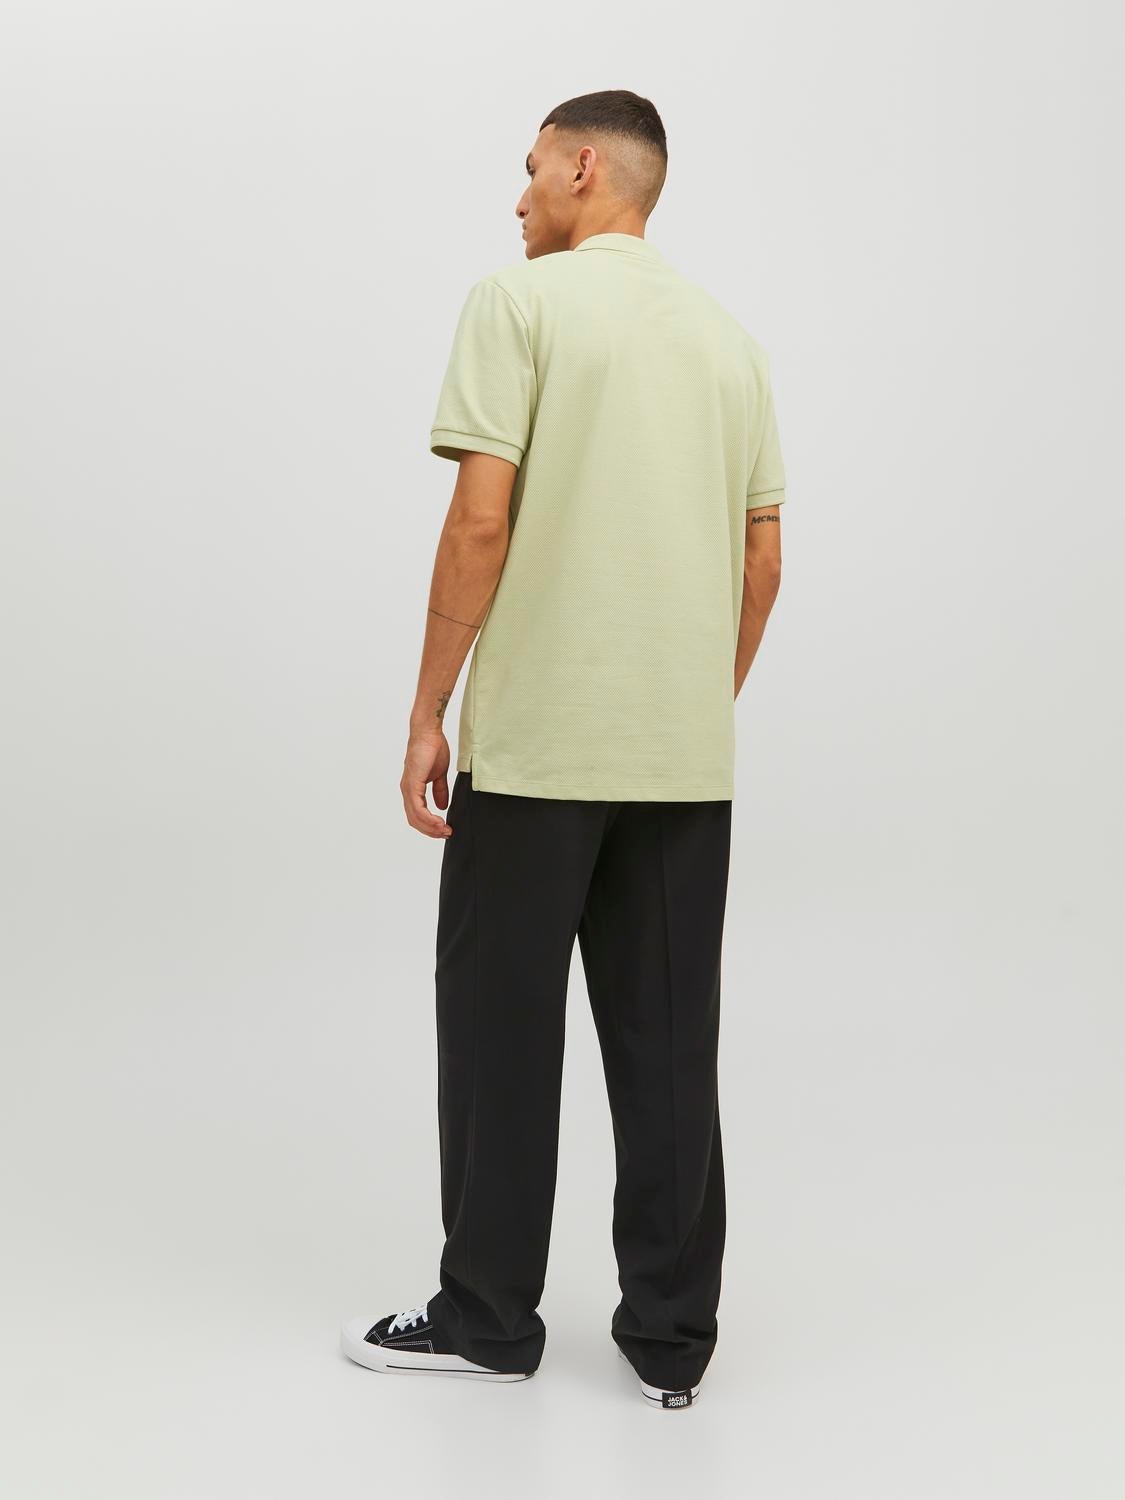 Jack & Jones Plain Shirt collar Polo -Celadon Green - 12236235